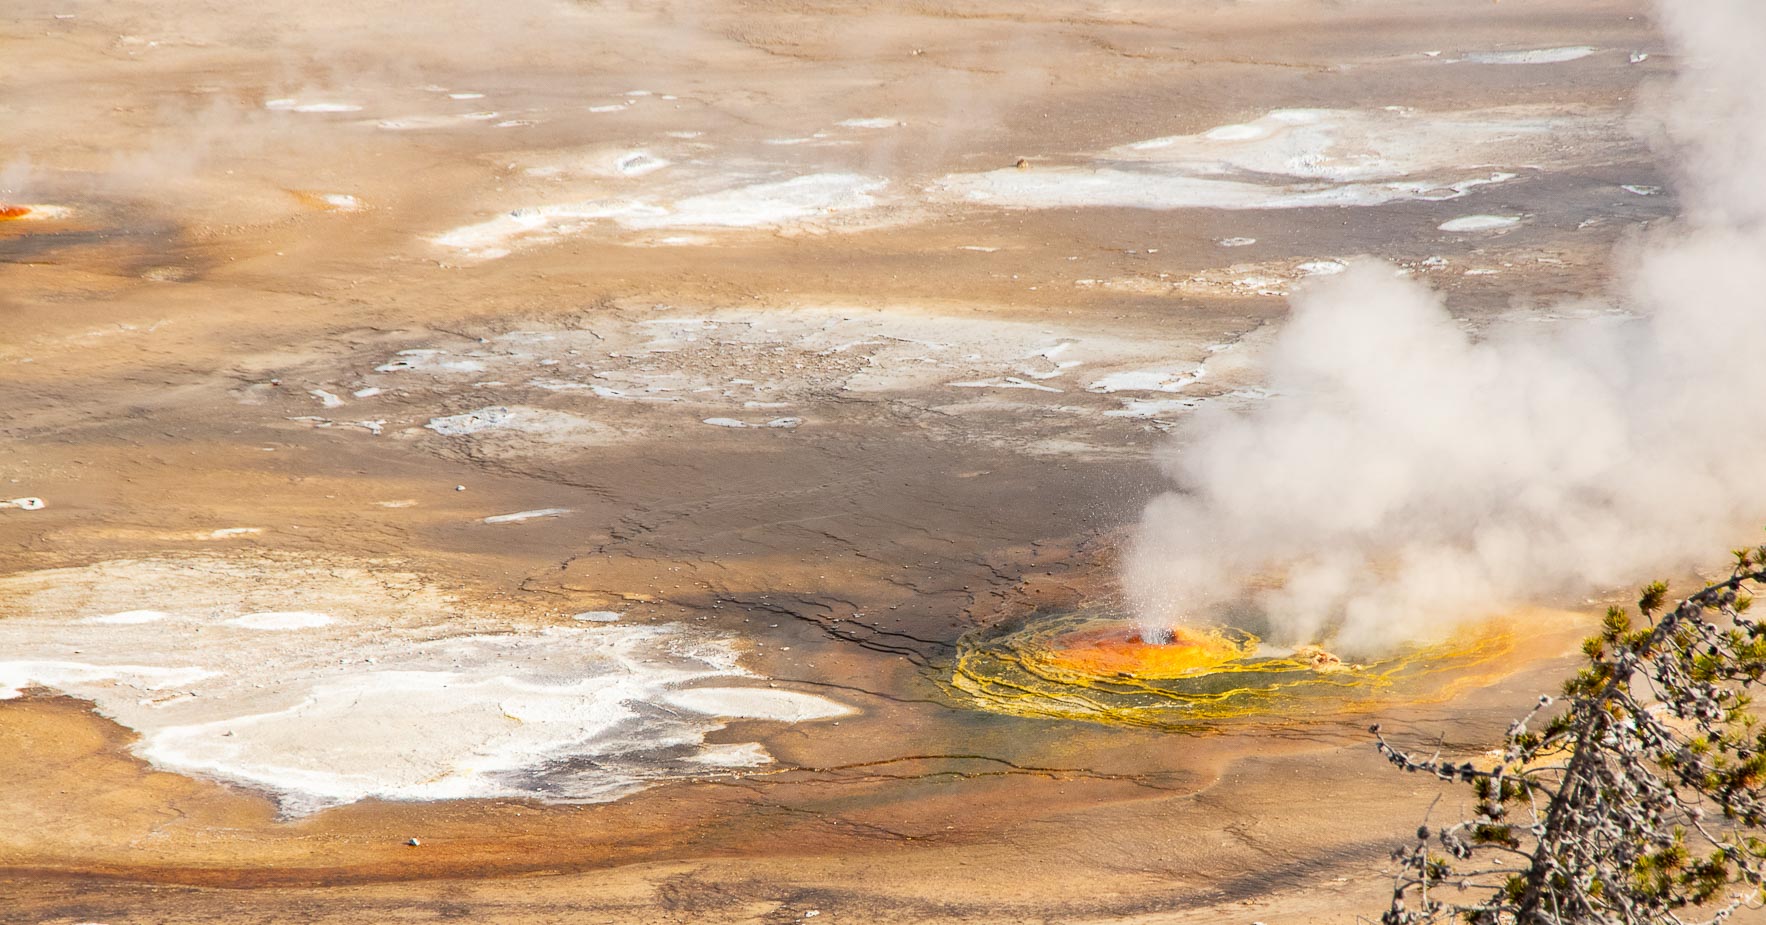 norris geyser basin yellowsonte national park (9)